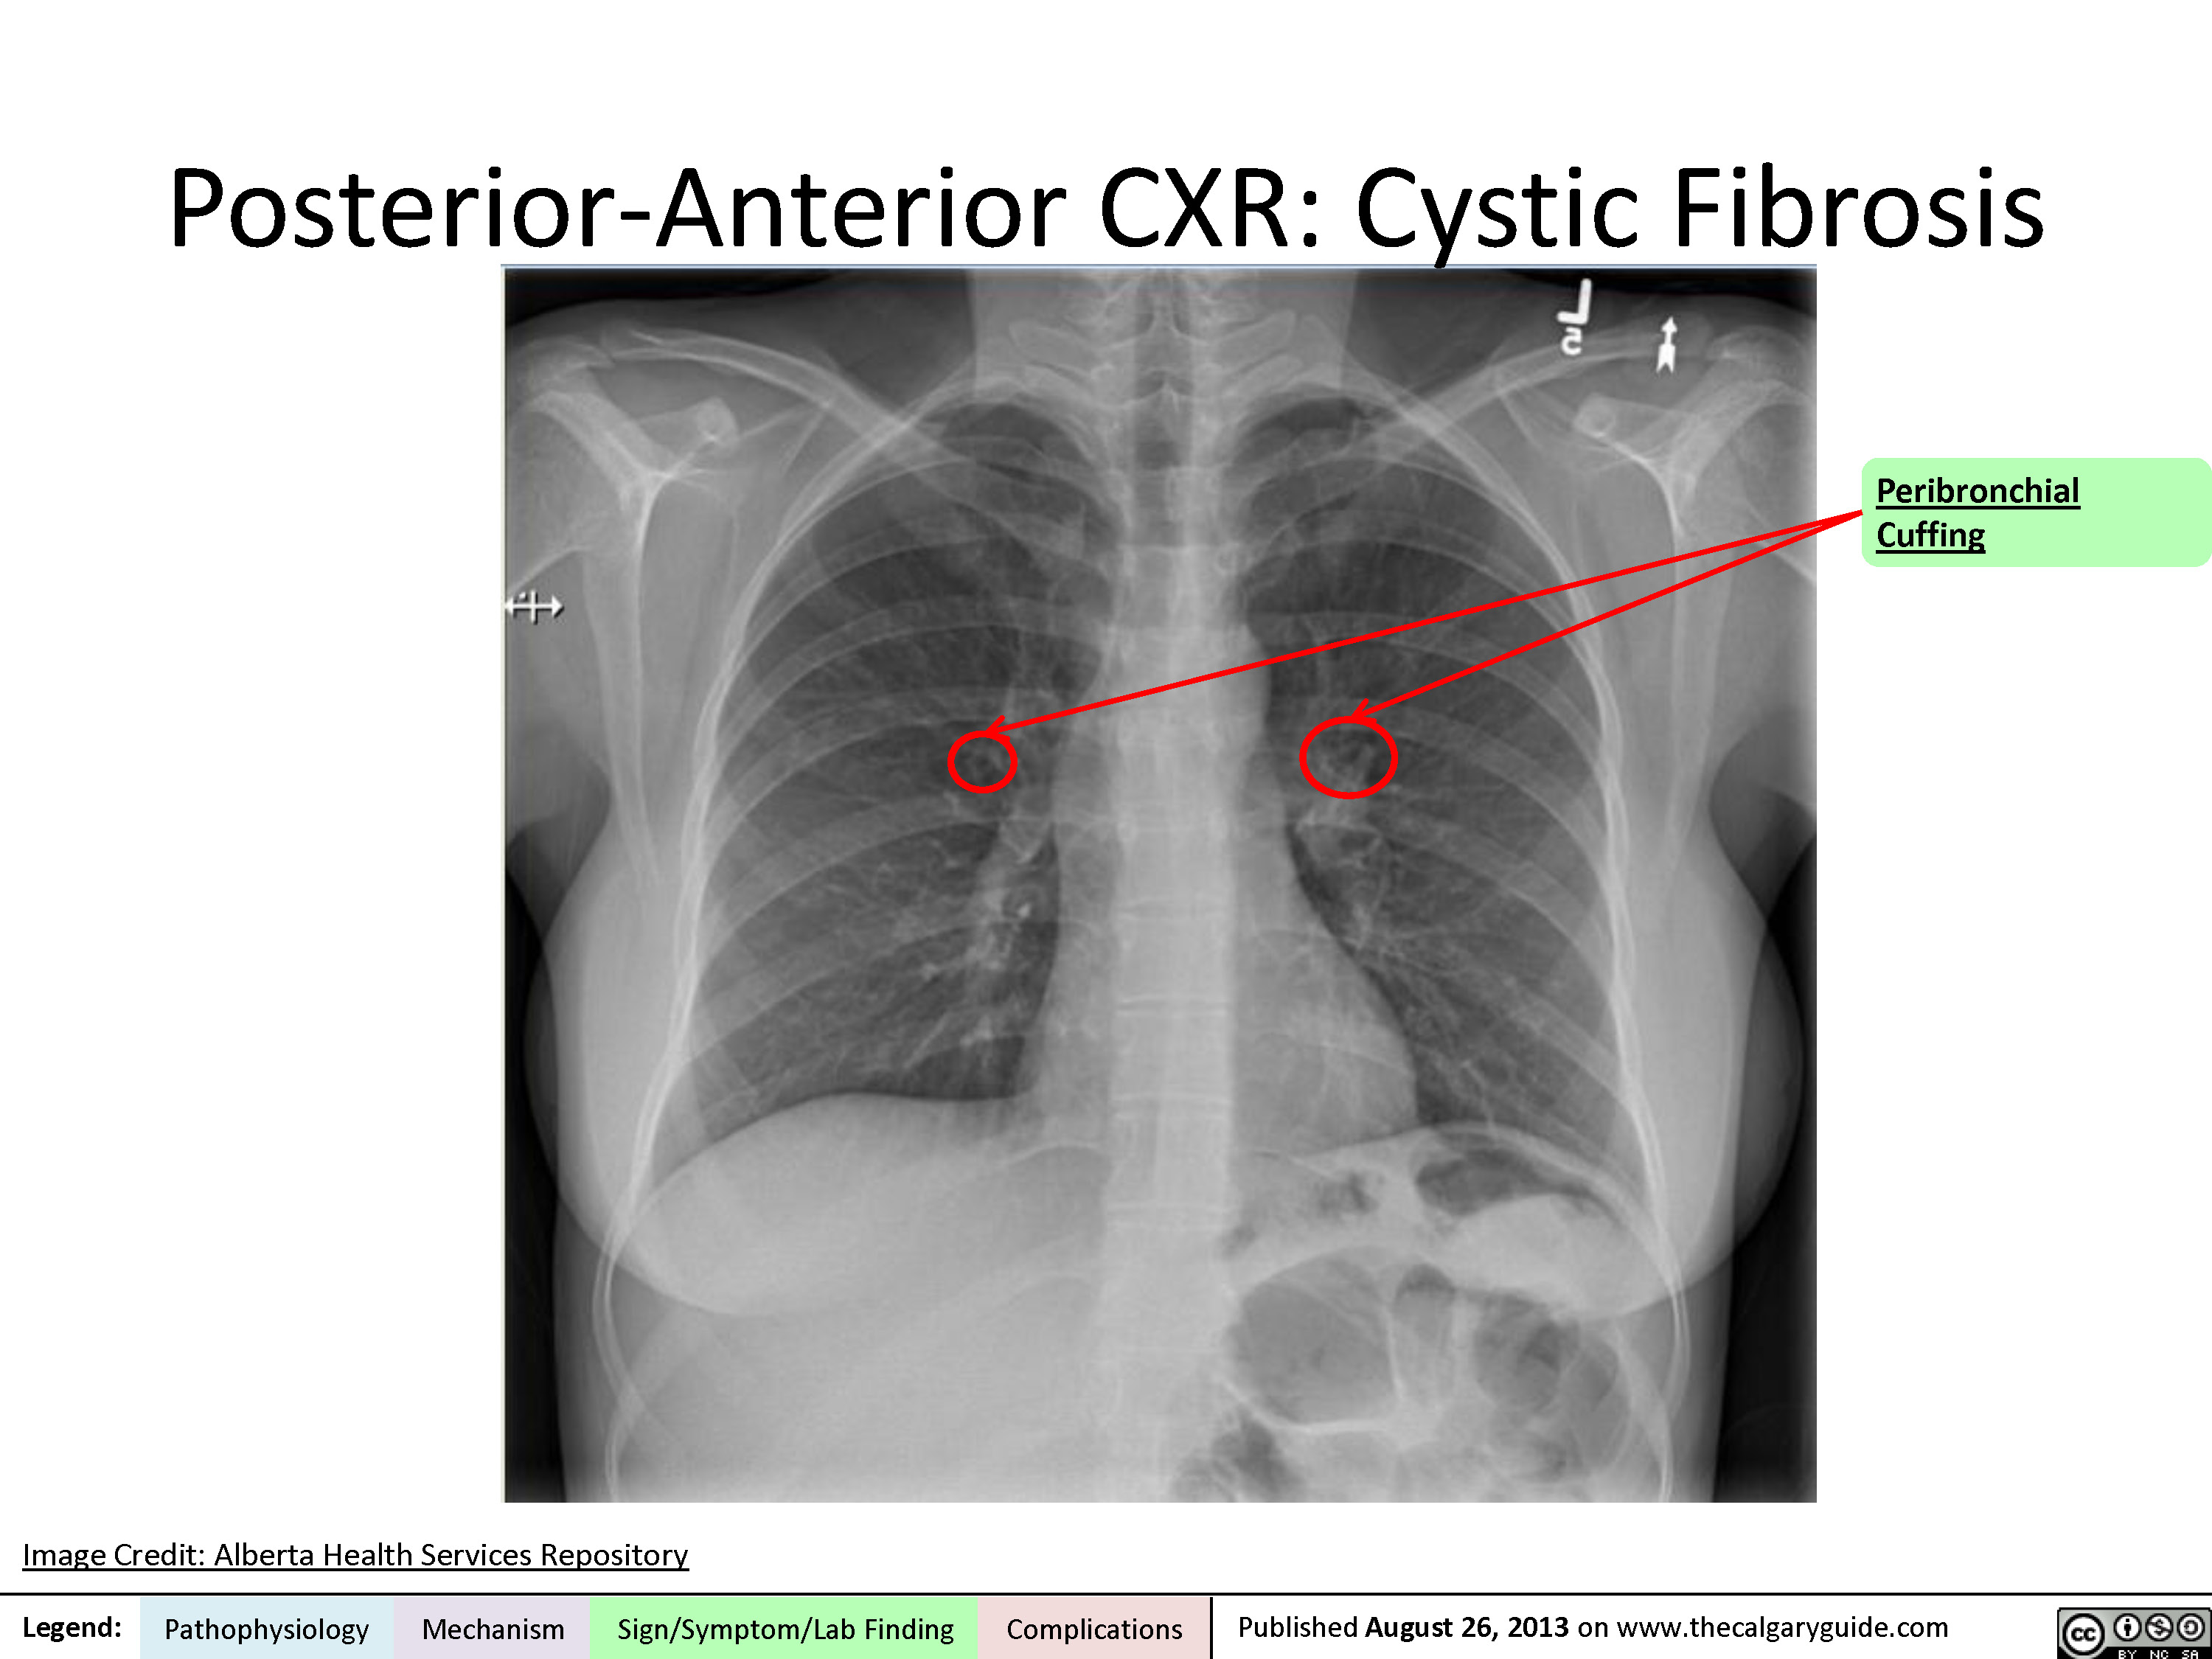 Posterior-Anterior Chest X-Ray